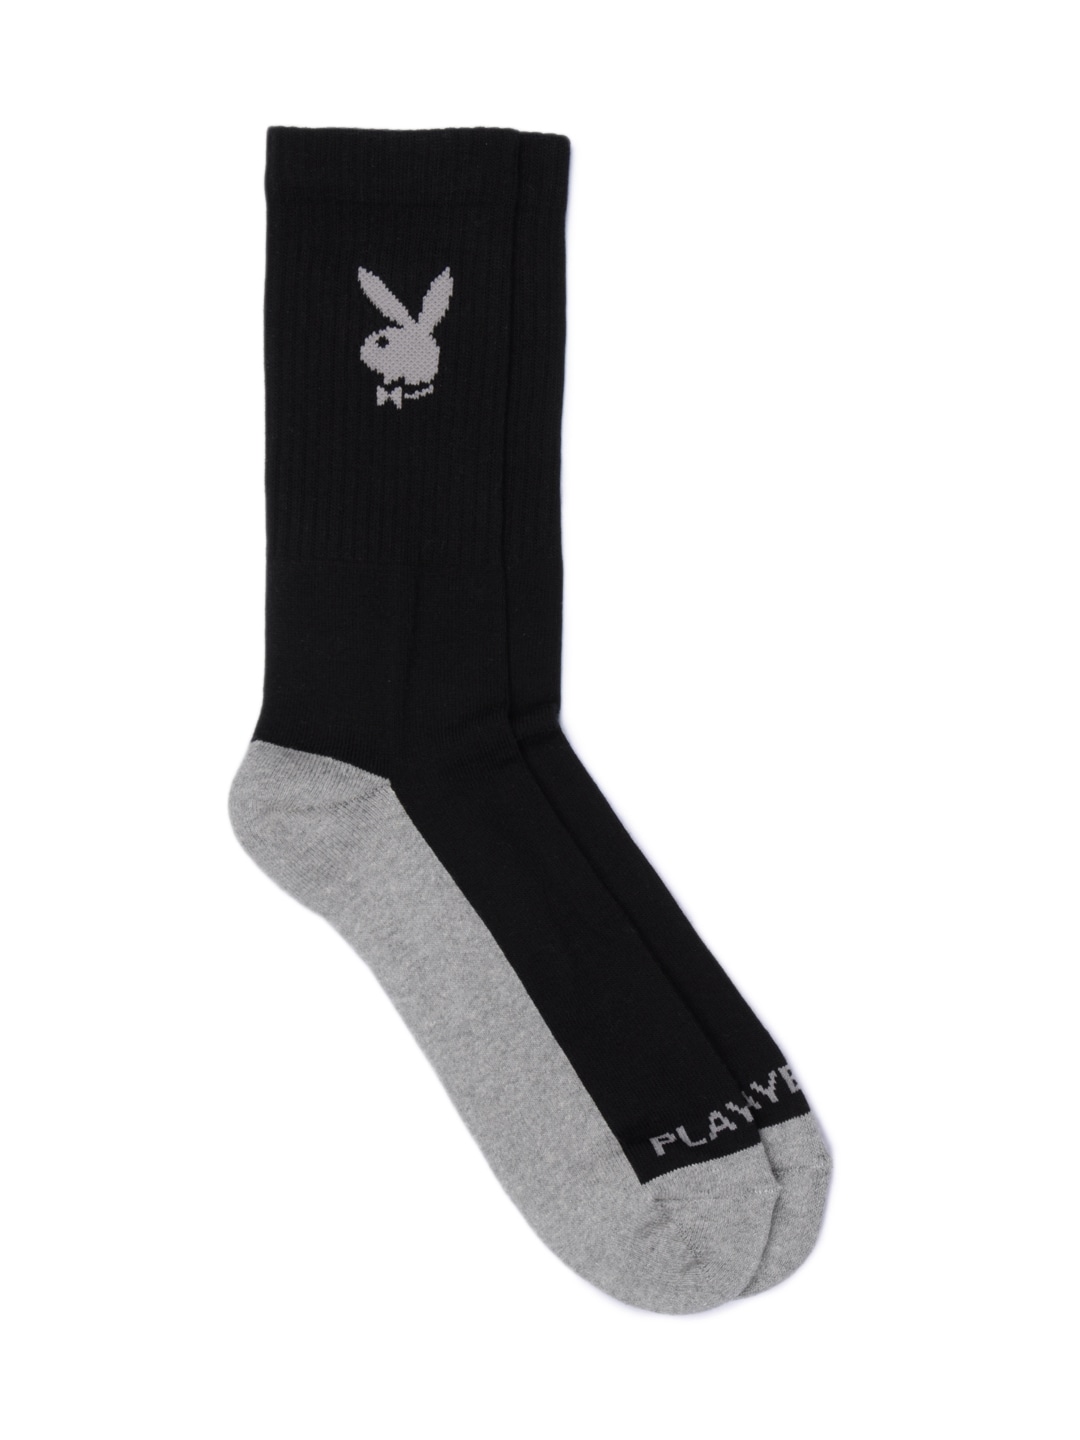 Playboy Men Grey & Black Socks